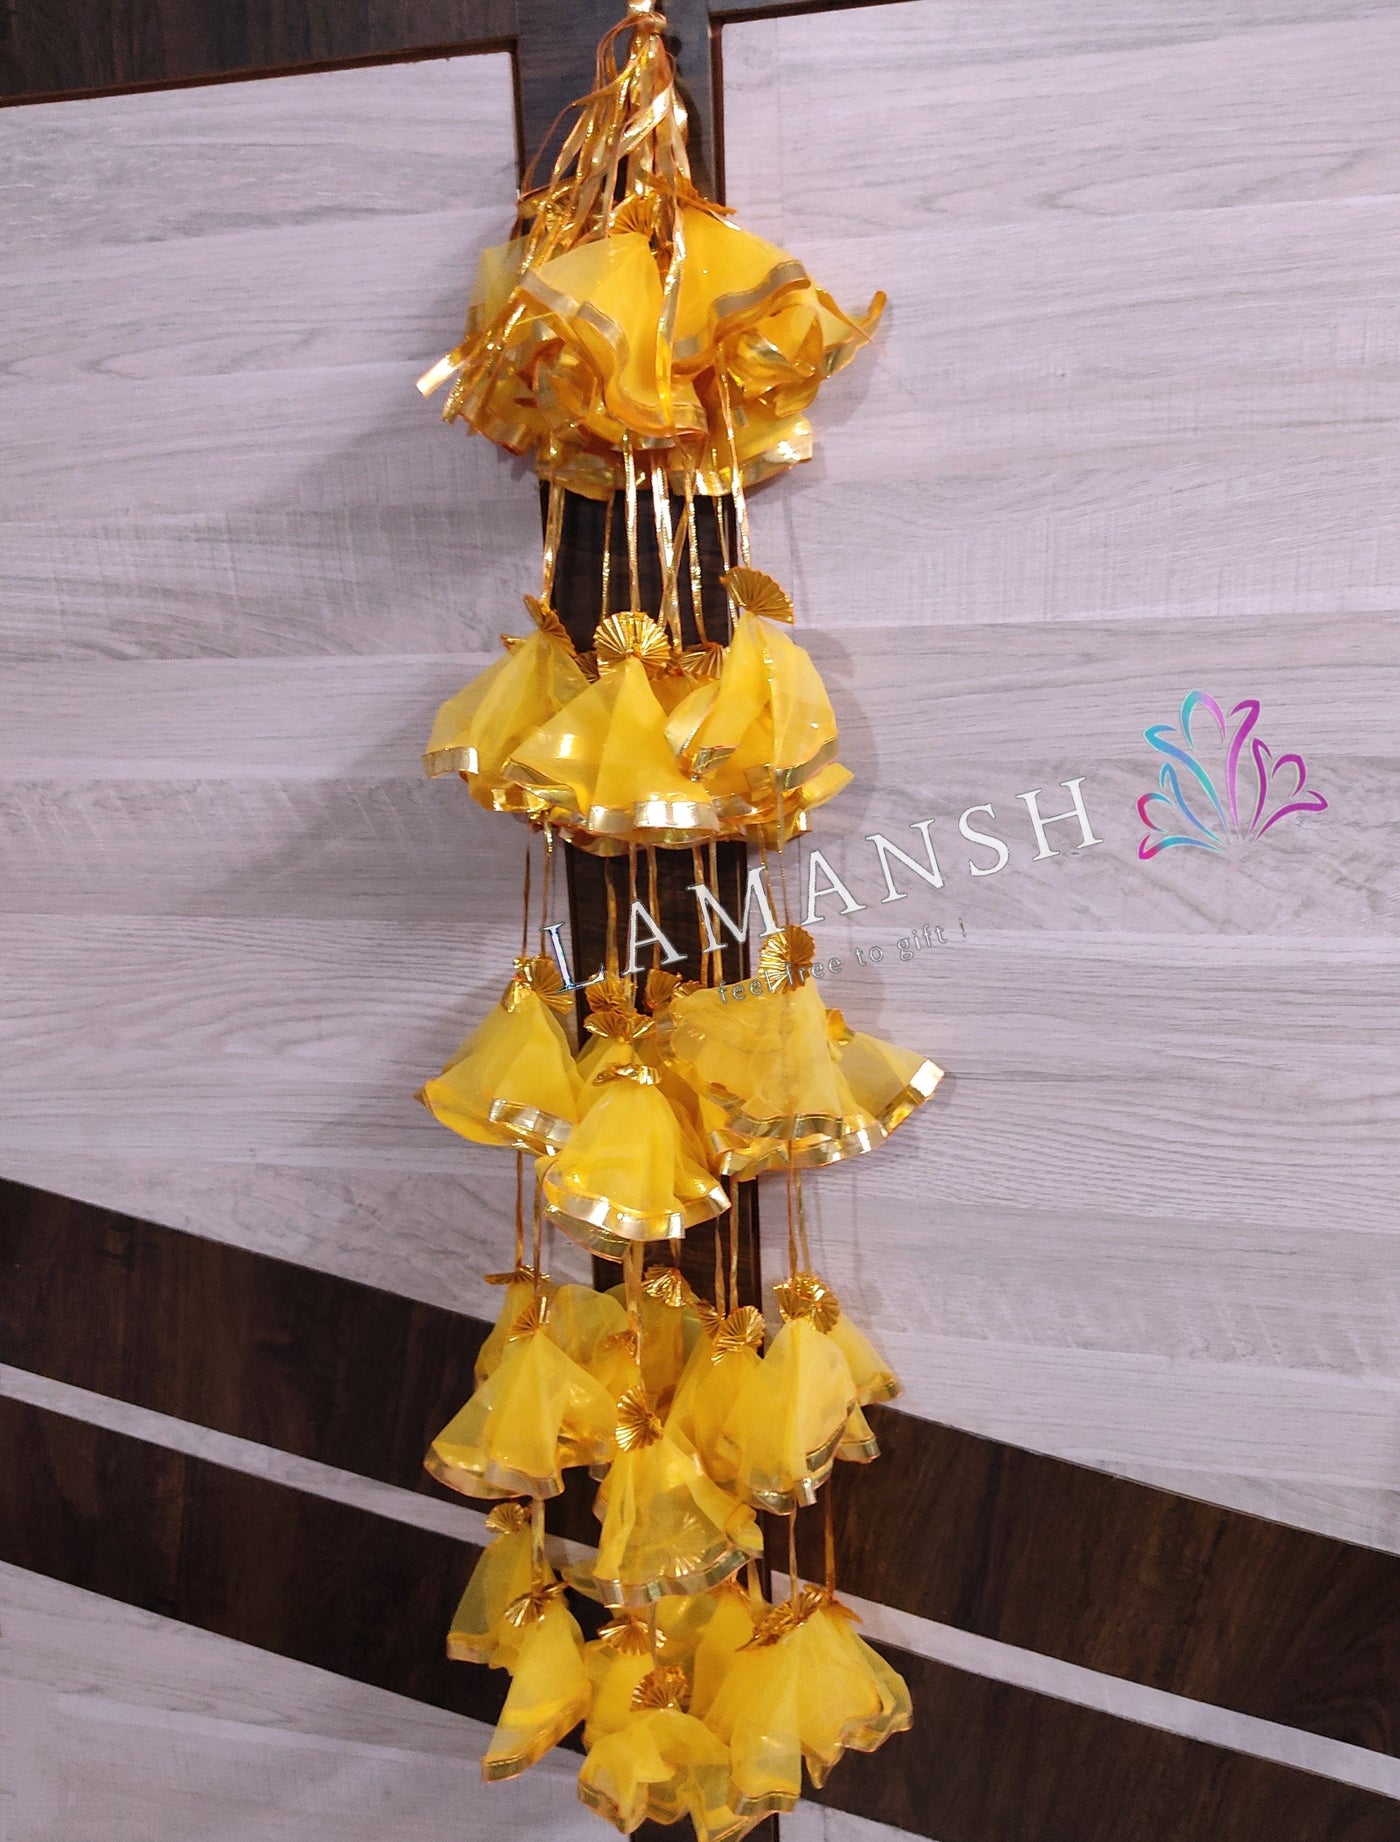 Lamansh net hangings Net Fabric & Gota / Yellow LAMANSH® ( Pack of 10 ) 4 ft Net Hangings for Wedding Backdrops / Fabric Gota hangings for Haldi & Indian Wedding Event Decoration